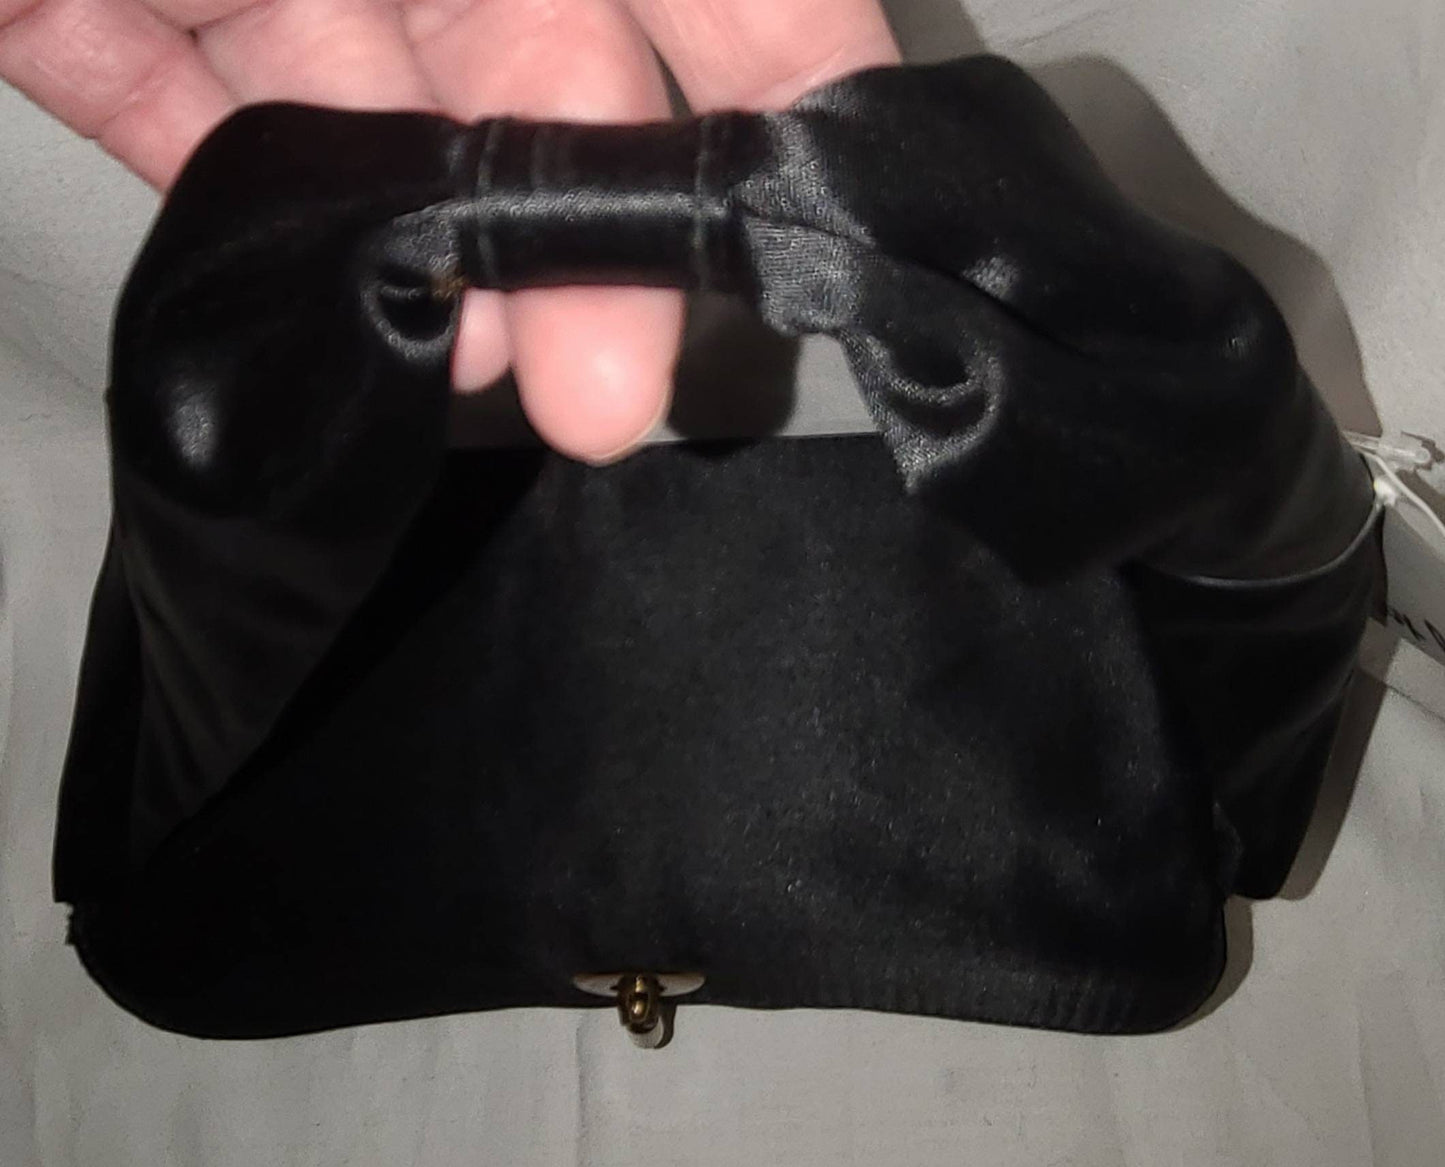 Unused Vintage 1940s Purse Small Black Satin Box Purse Evening Bag Bow Handle Unique Clasp Art Deco Film Noir Rockabilly